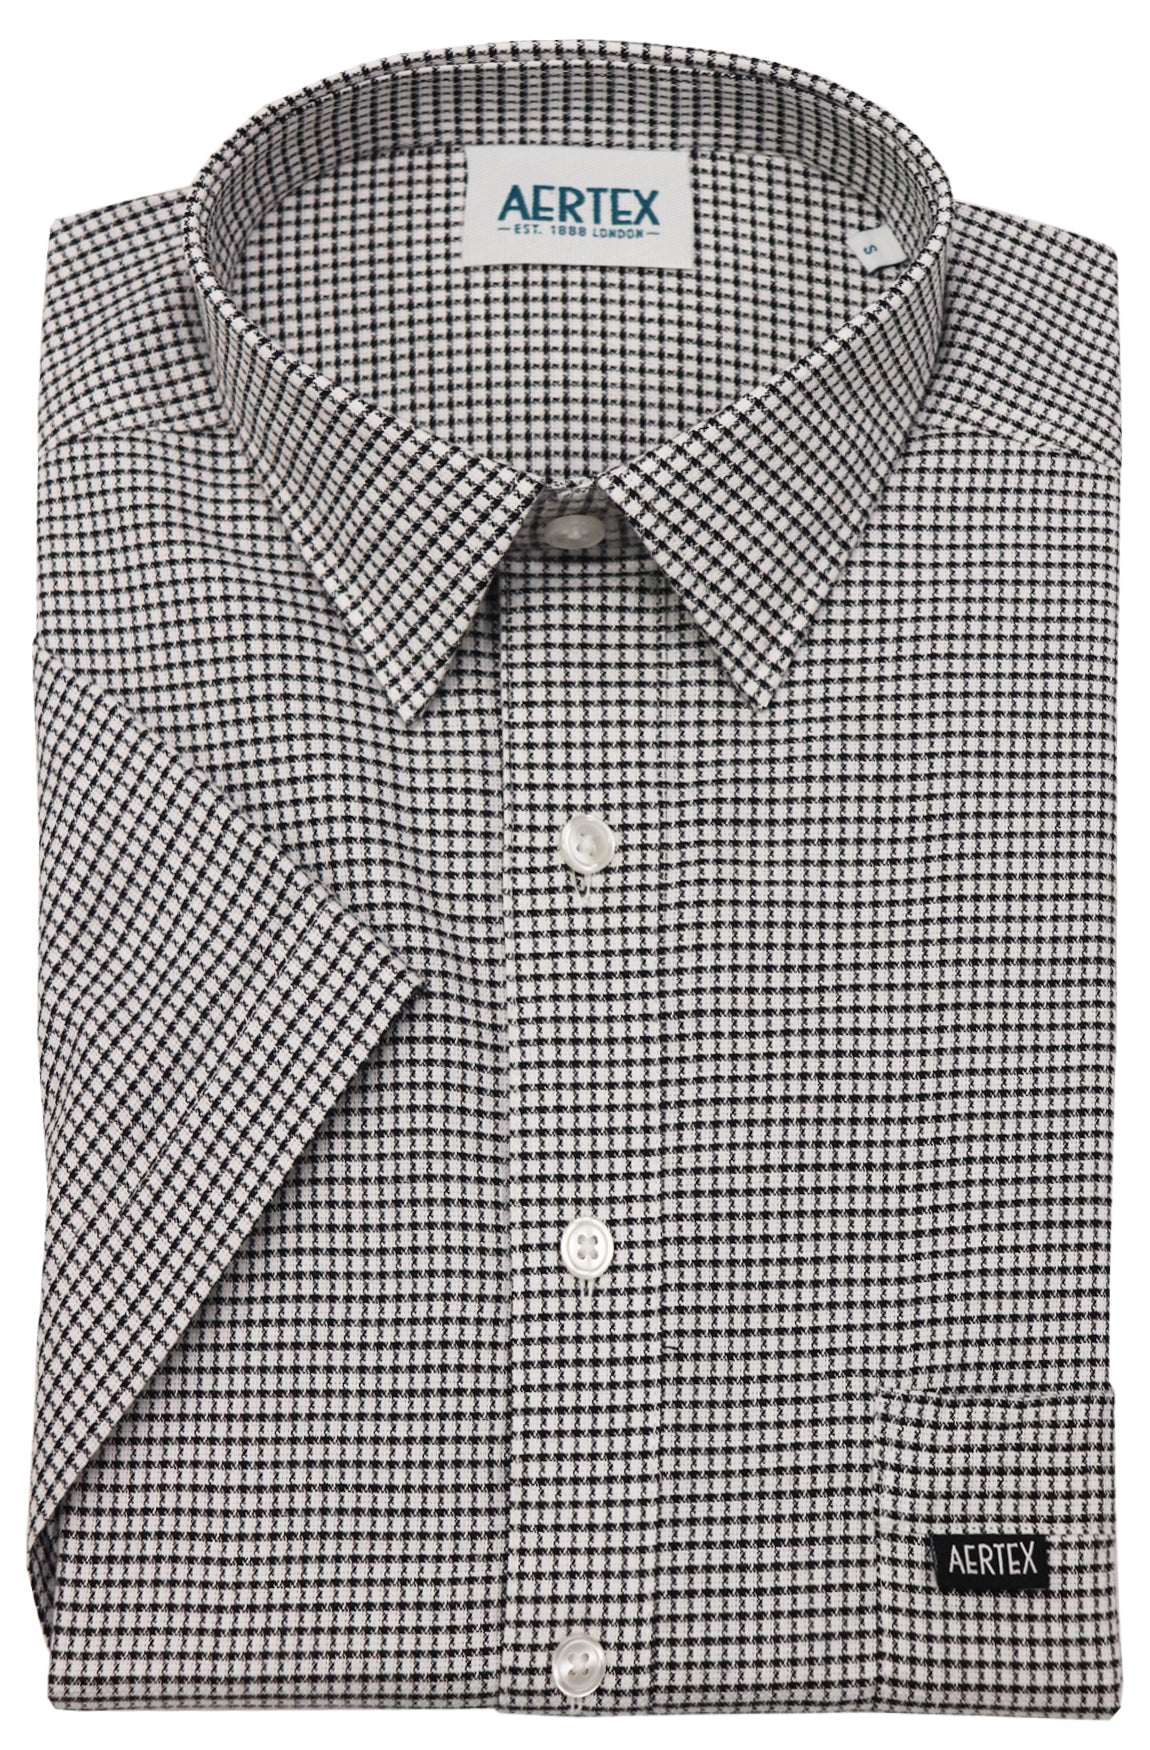 Aertex 88995 Taunton Polo - Thomson's Suits Ltd - Black - S - 3545